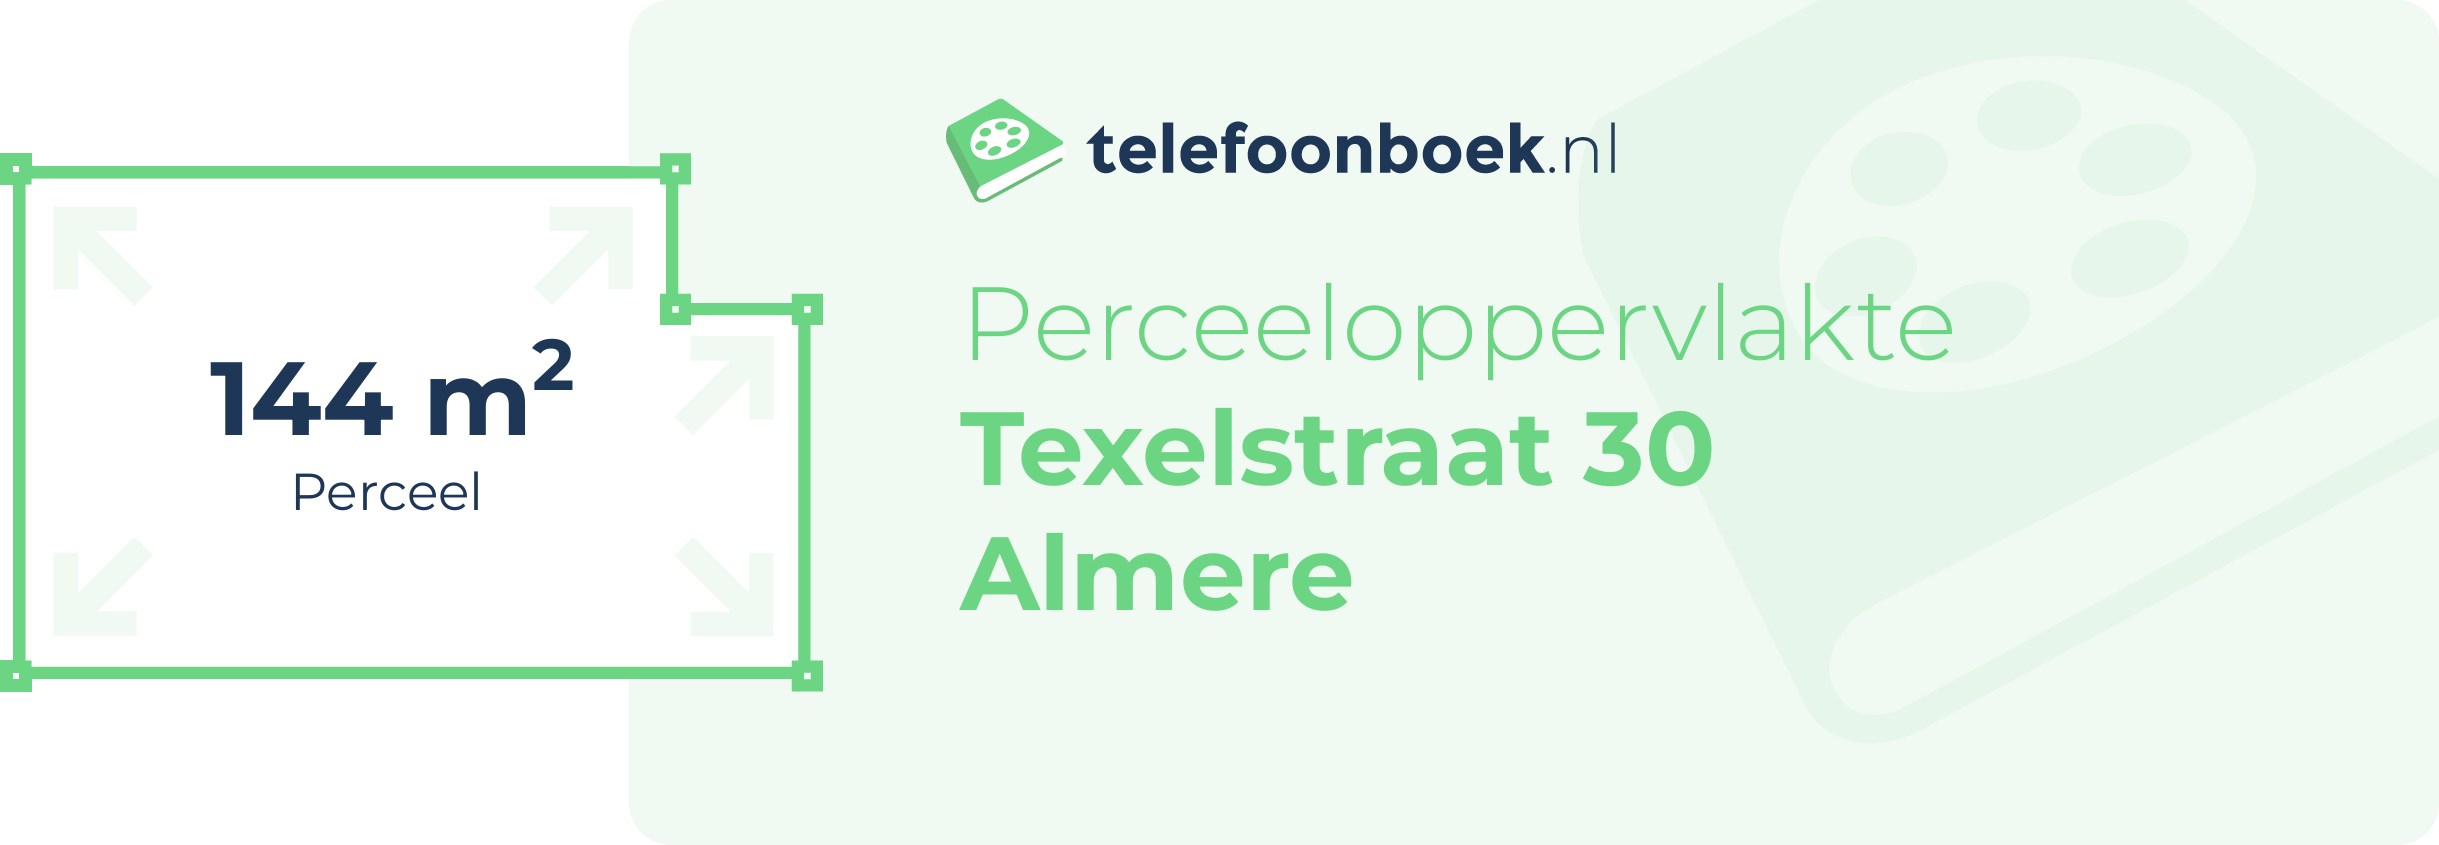 Perceeloppervlakte Texelstraat 30 Almere